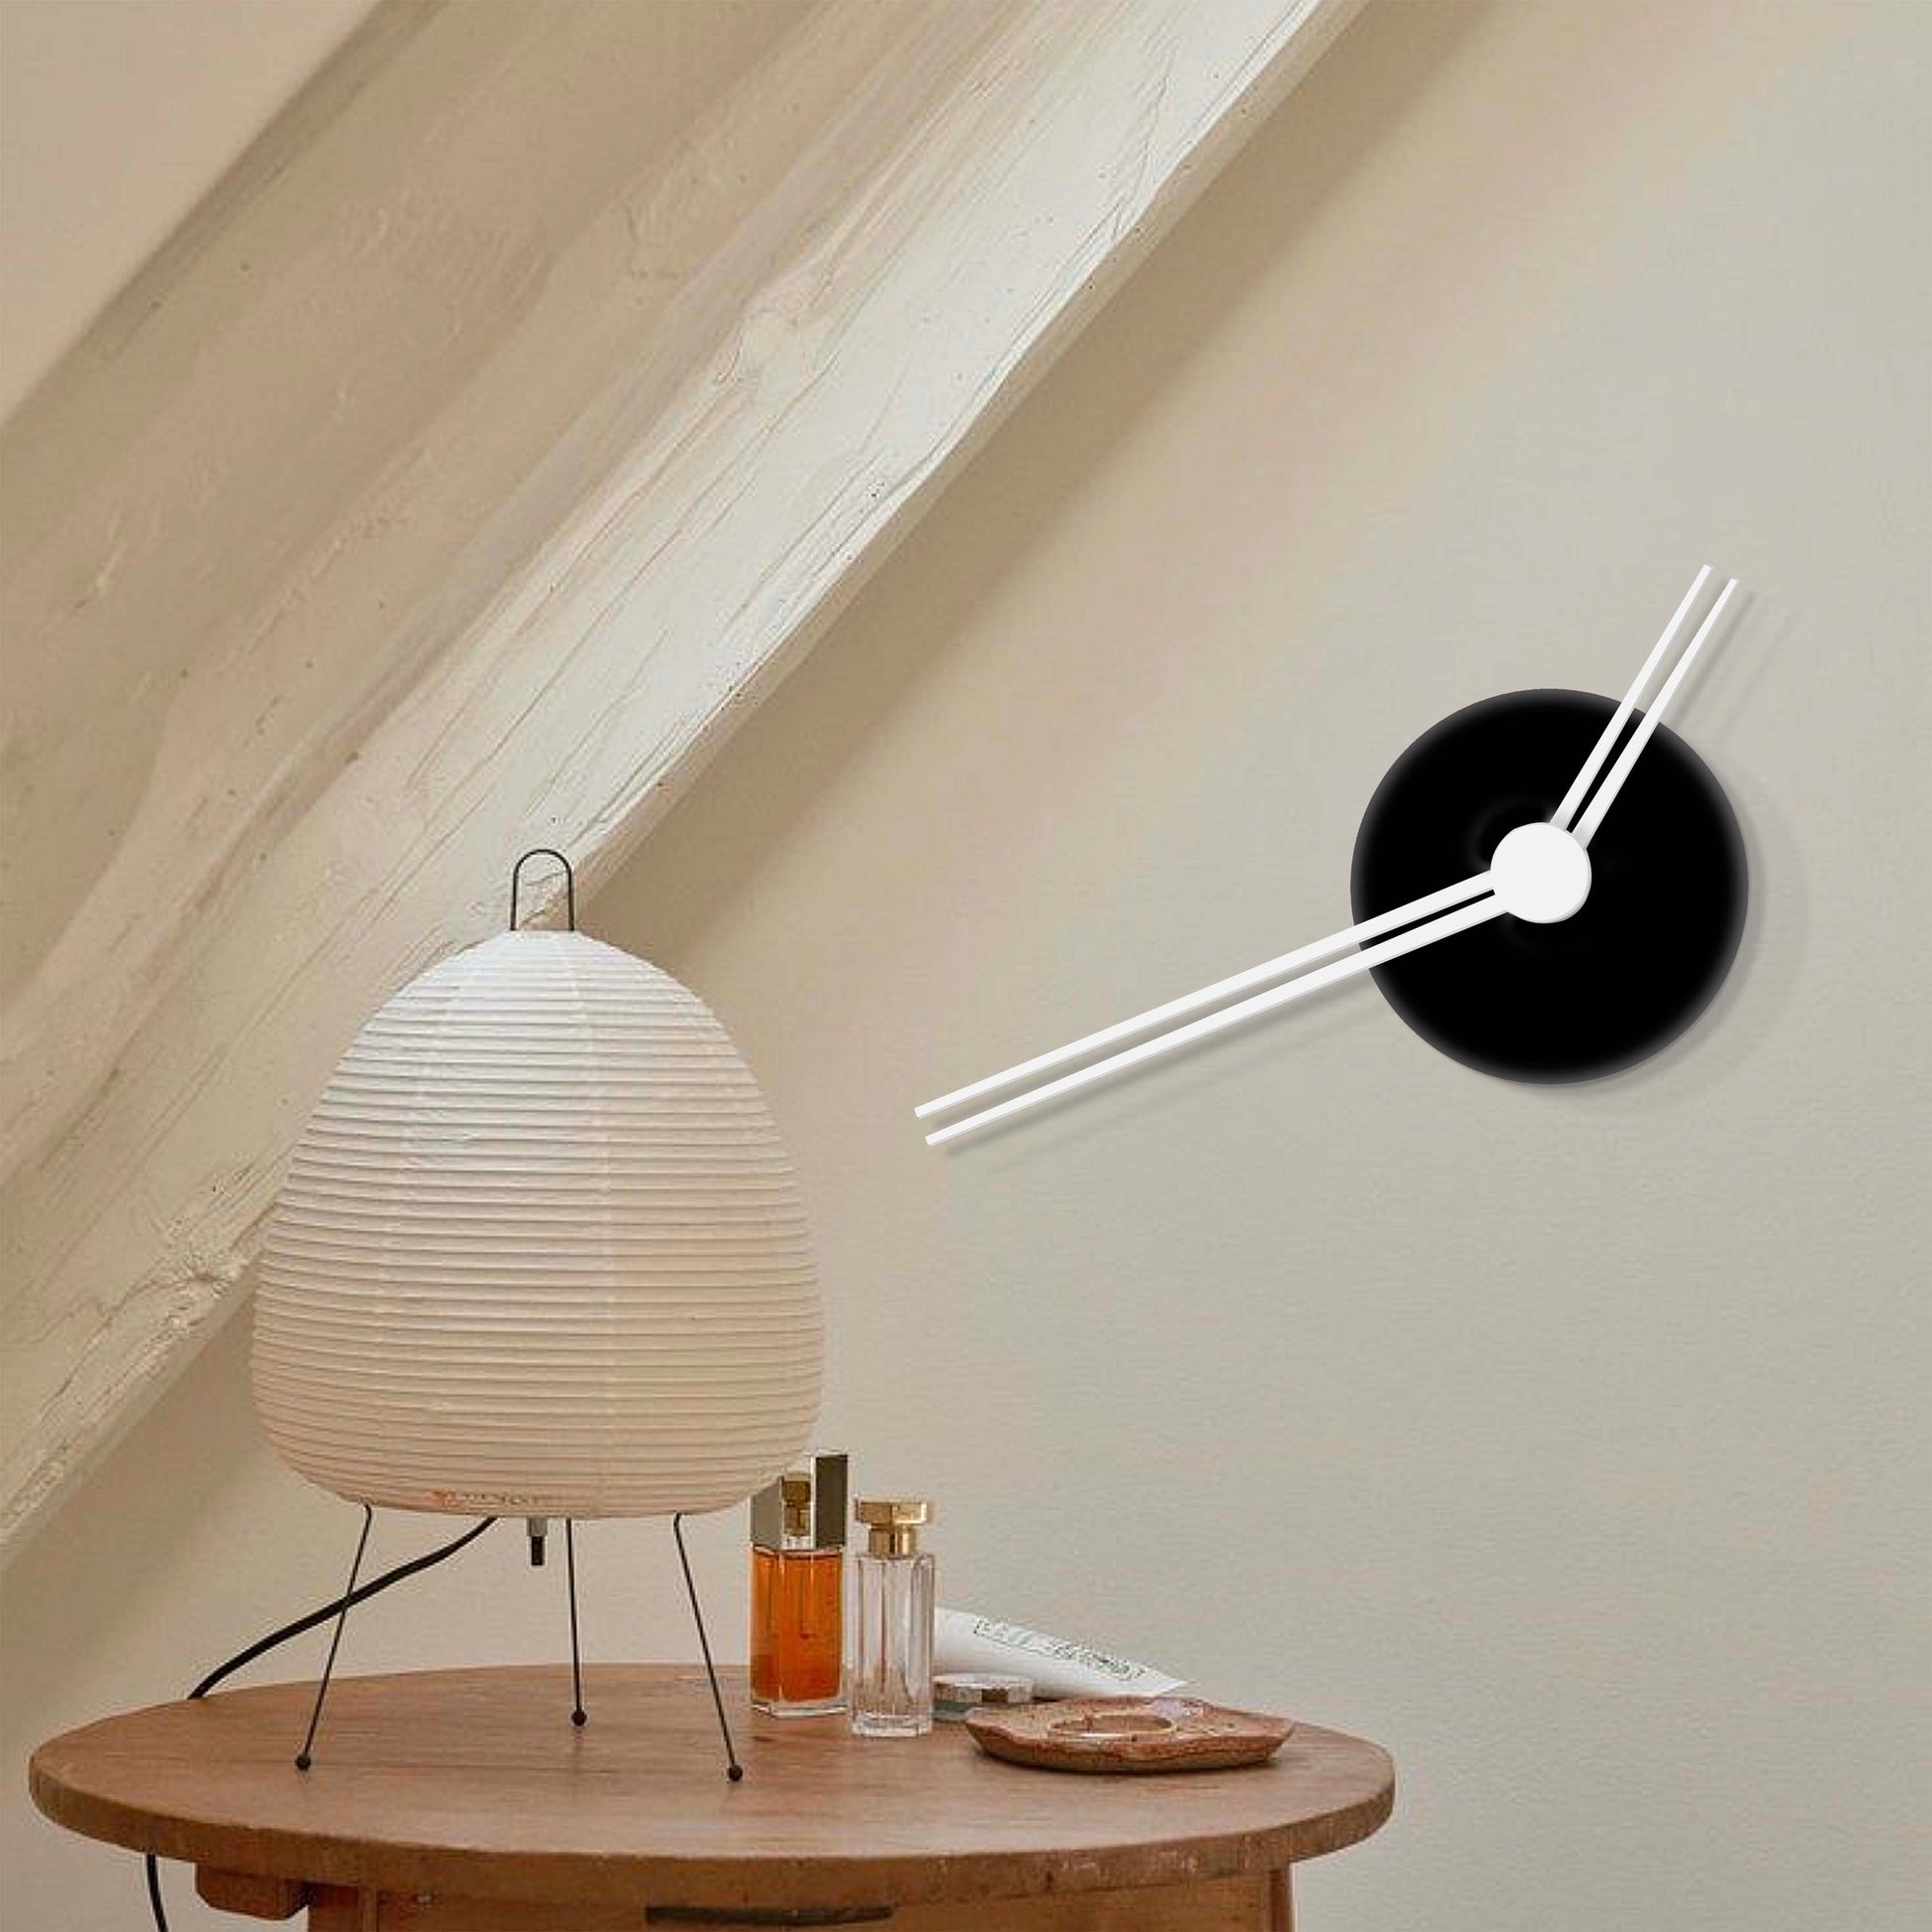 Capriccio wall clock next to a lamp against a beige wall